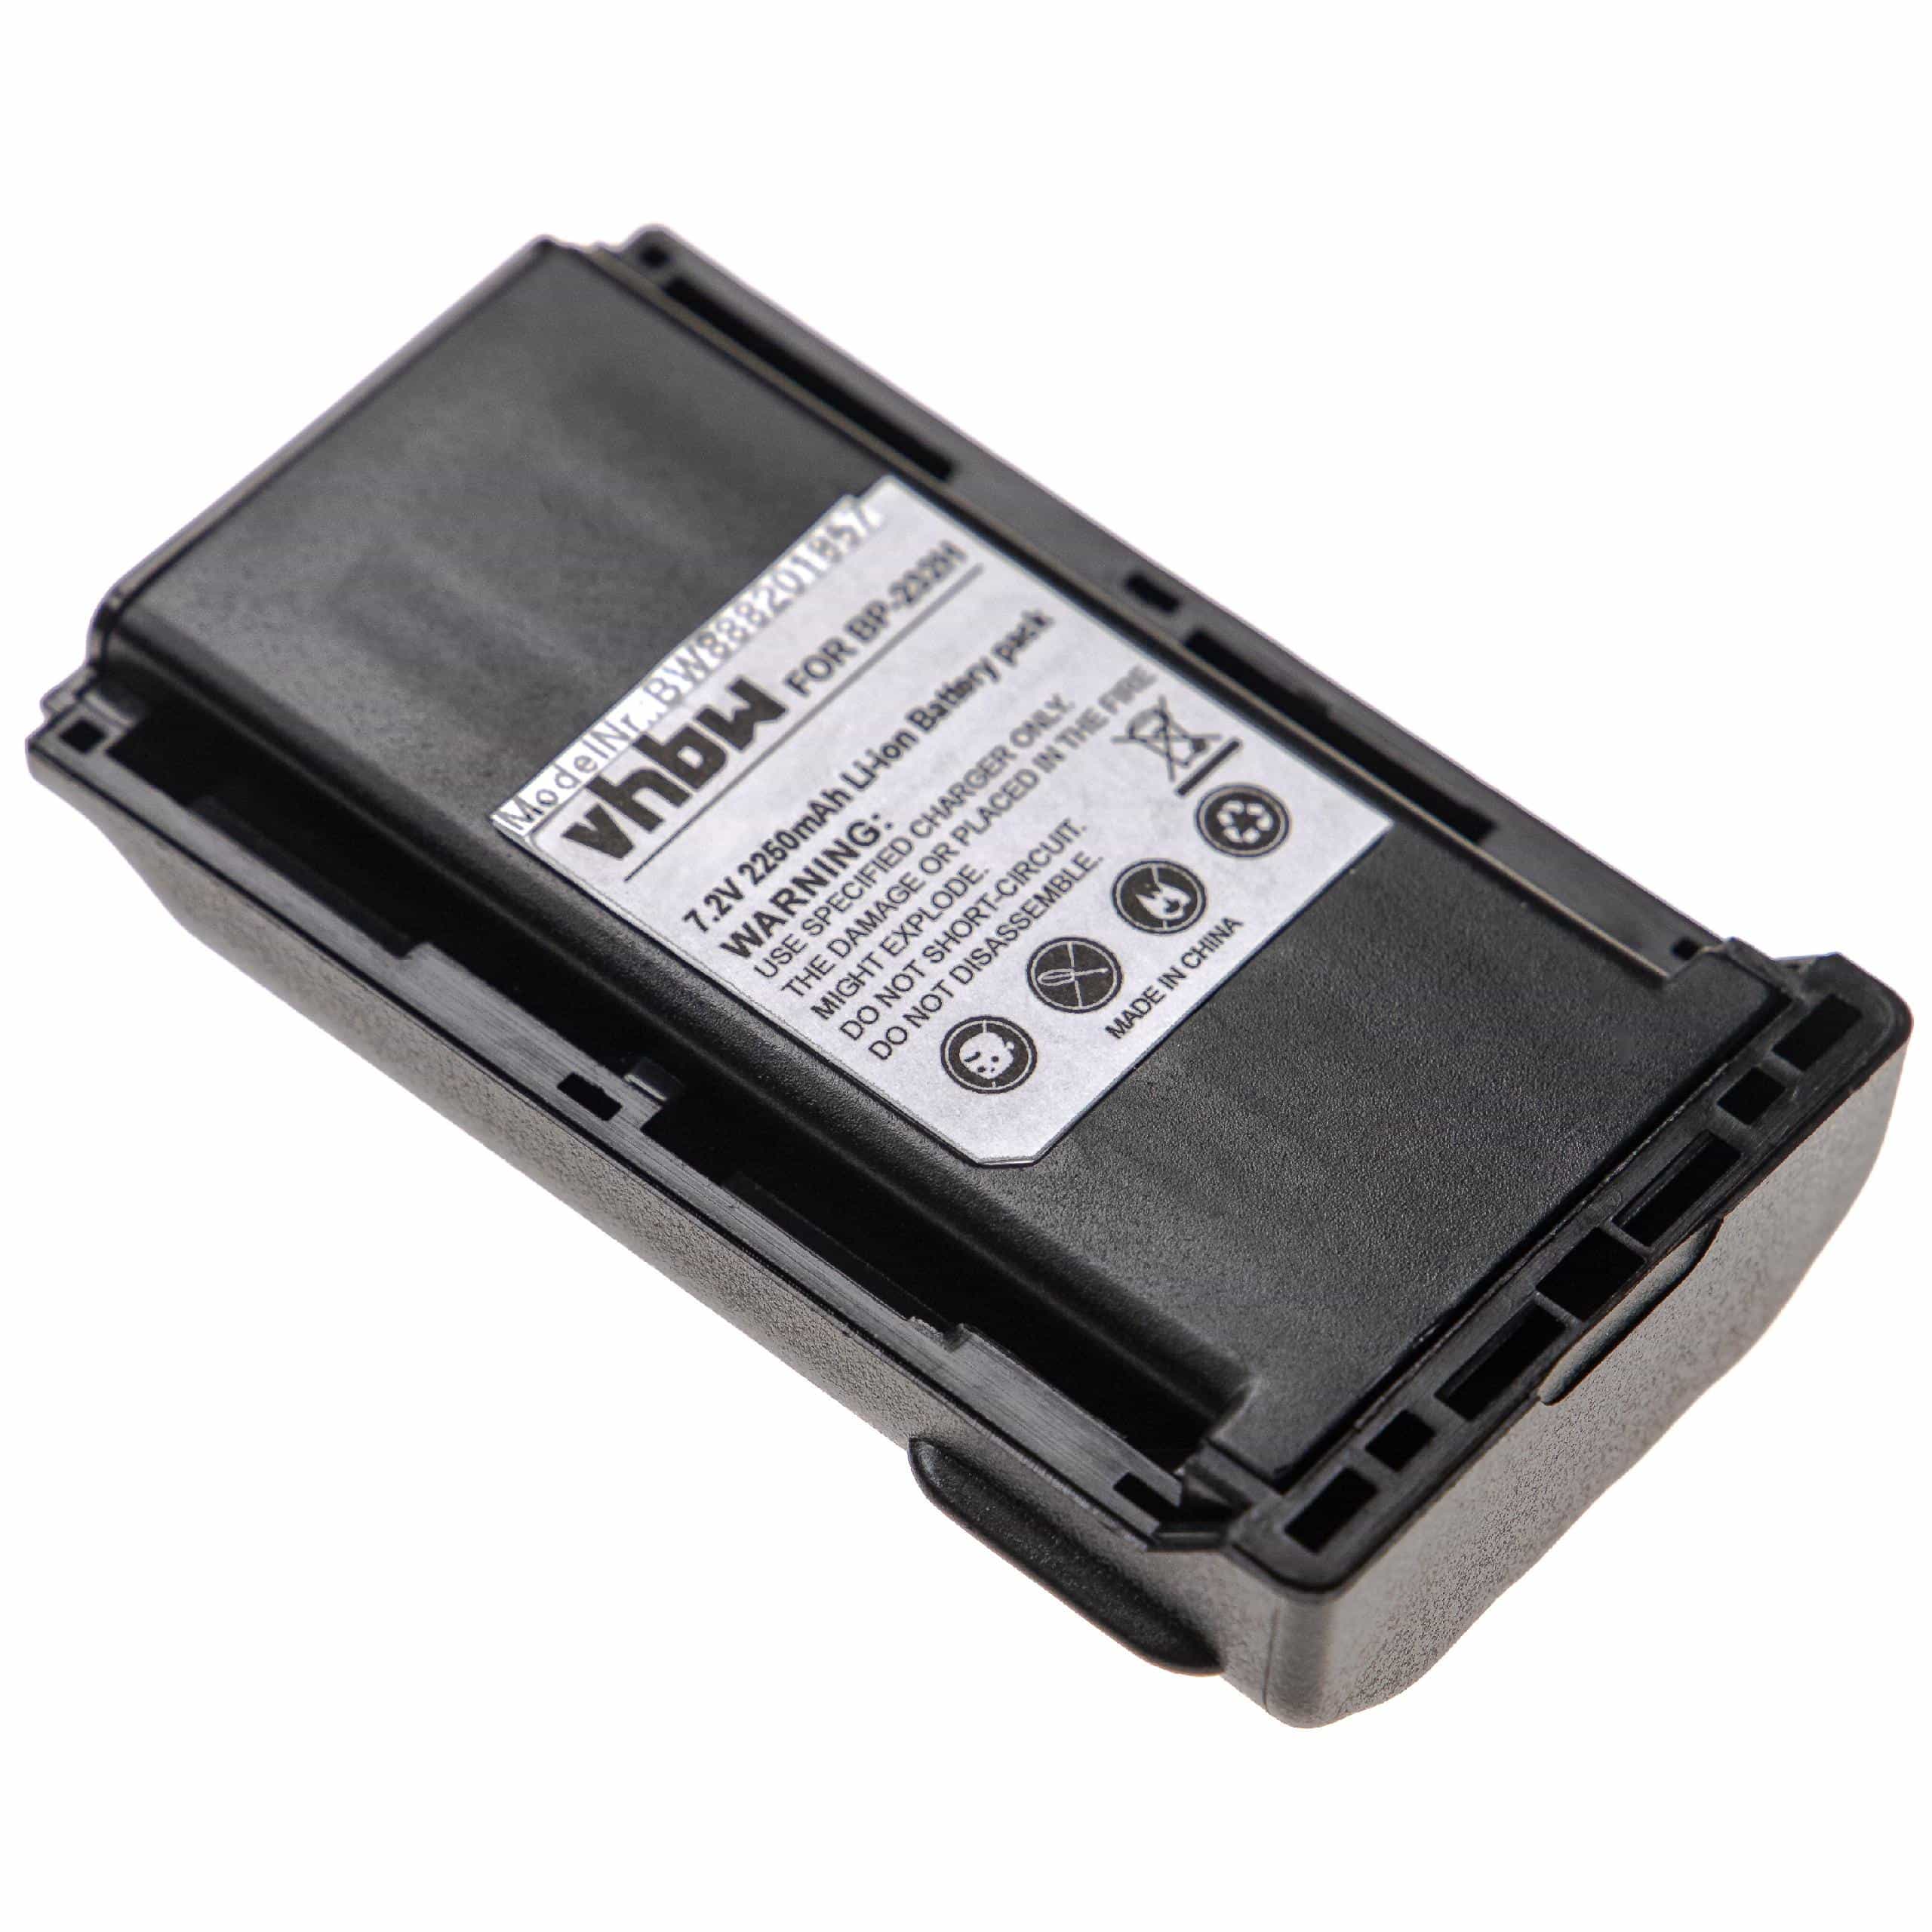 Batería reemplaza Icom BJ-2000, BP-231, BP-230, BP-230N para radio, walkie-talkie Icom - 2250 mAh 7,2 V Li-Ion